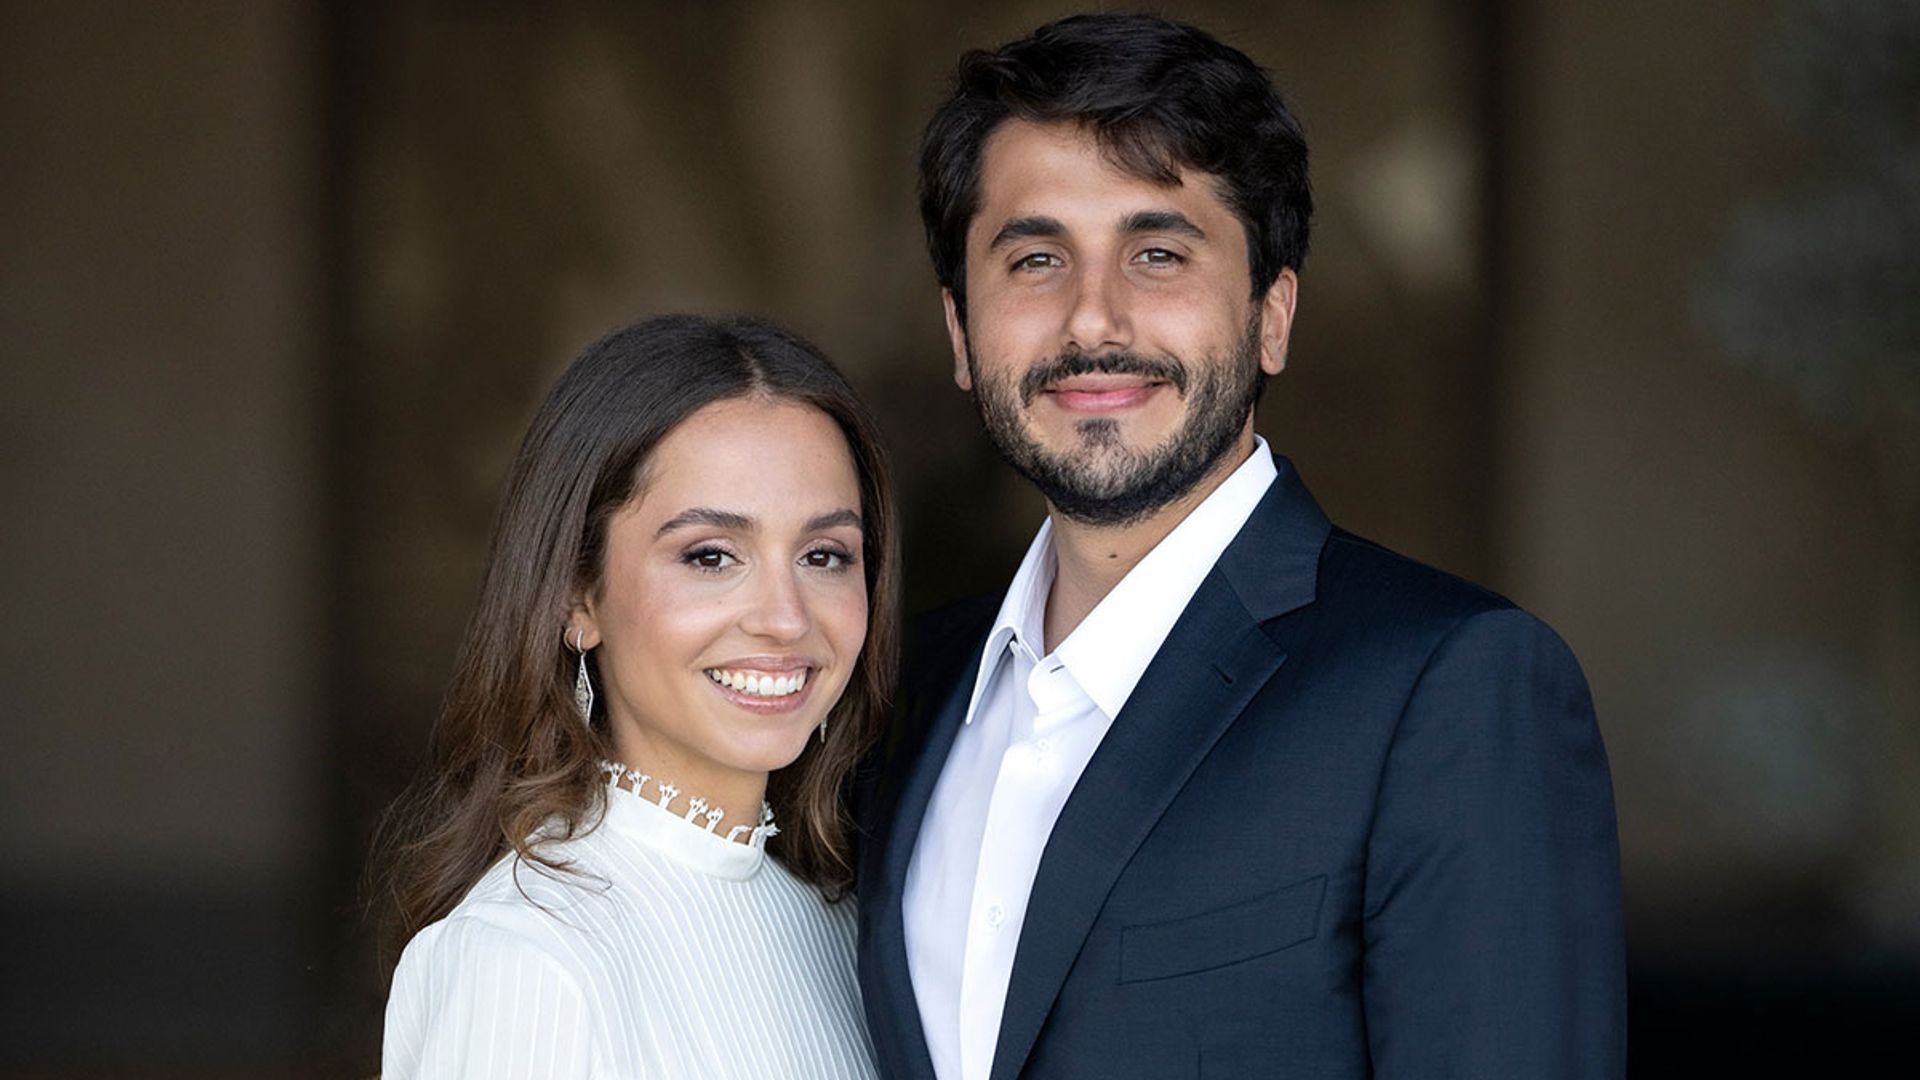 Who is Princess Iman's fiancé ahead of Jordan royal wedding?